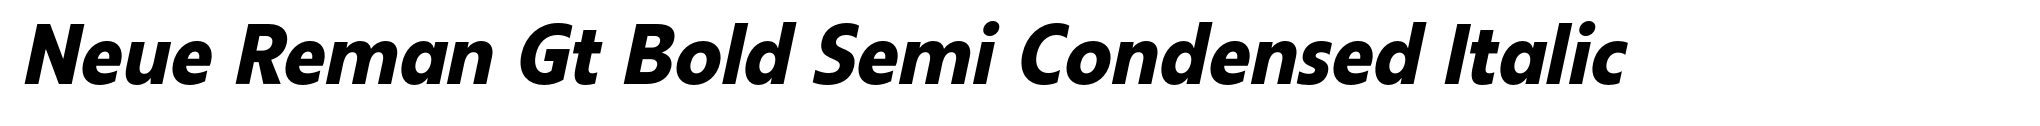 Neue Reman Gt Bold Semi Condensed Italic image